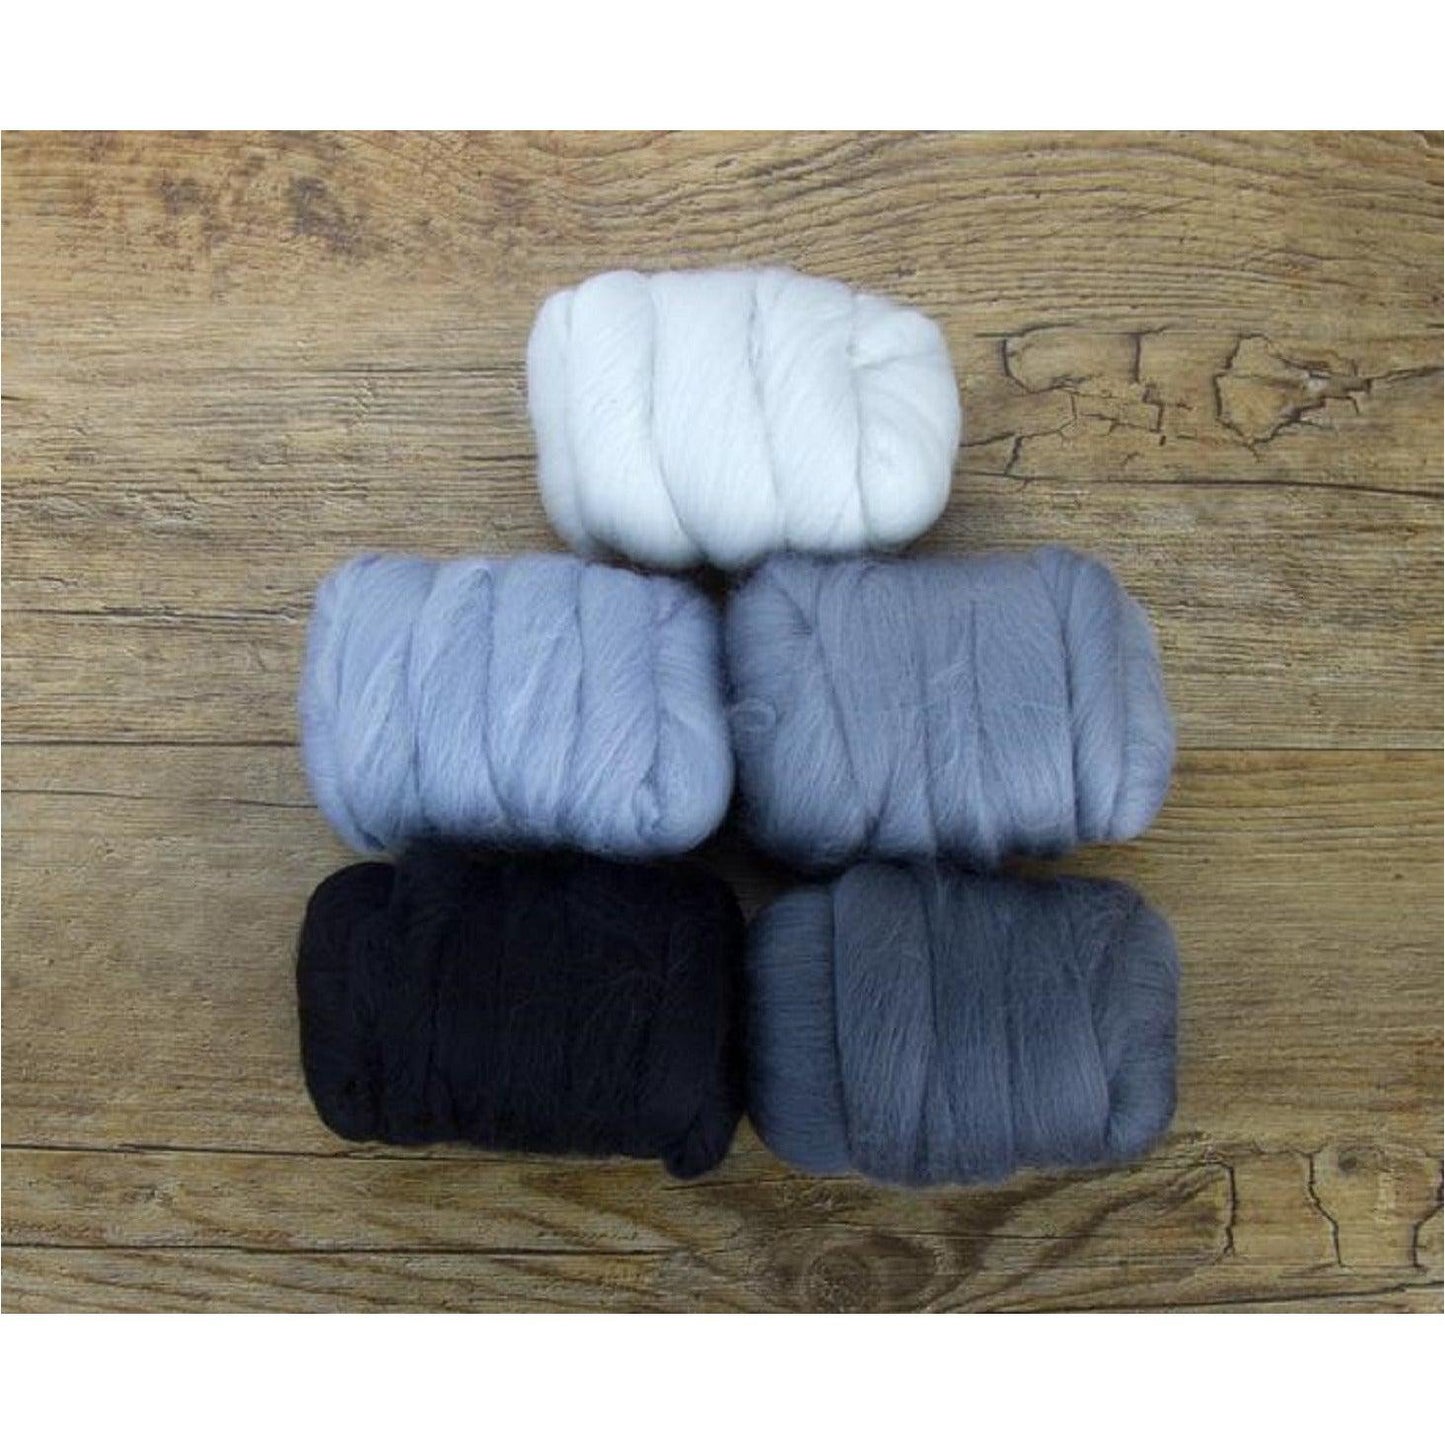 Mixed Merino Wool Variety Pack | Hazy Gray (Grays) 250 Grams, 23 Micron